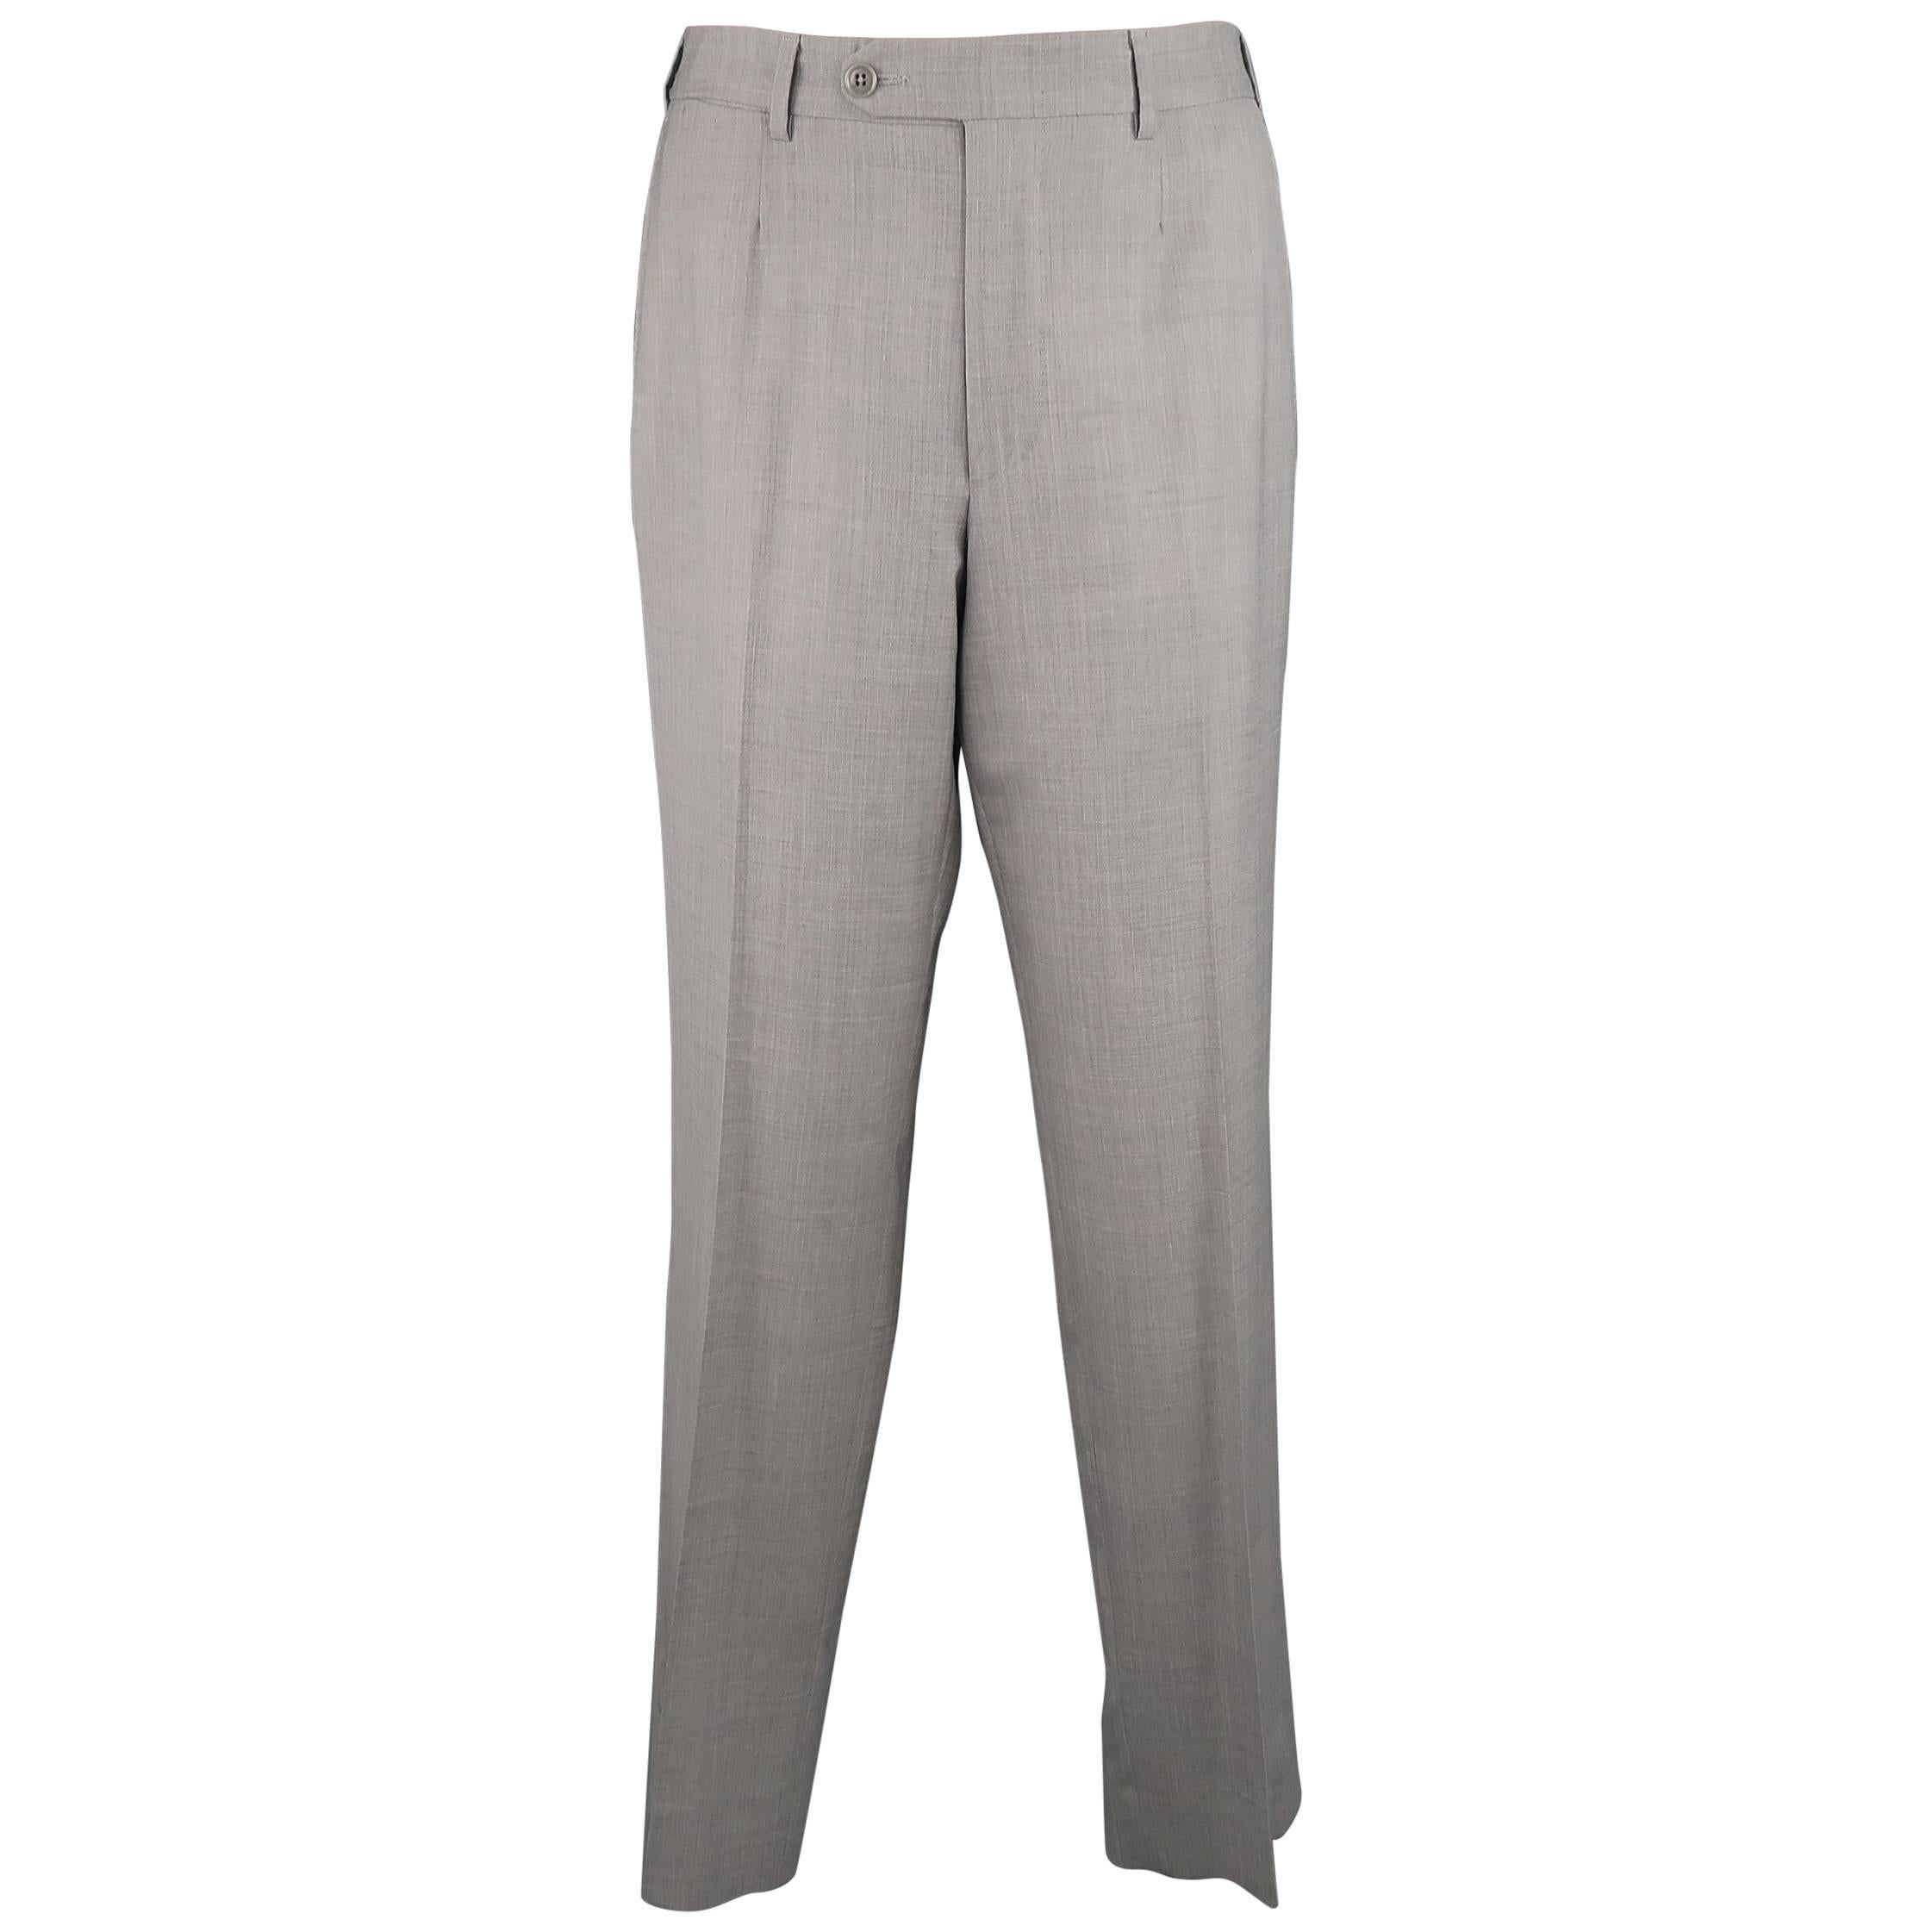 Men's ERMENEGILDO ZEGNA Size 32 Light Gray Wool Flat Front Dress Pants